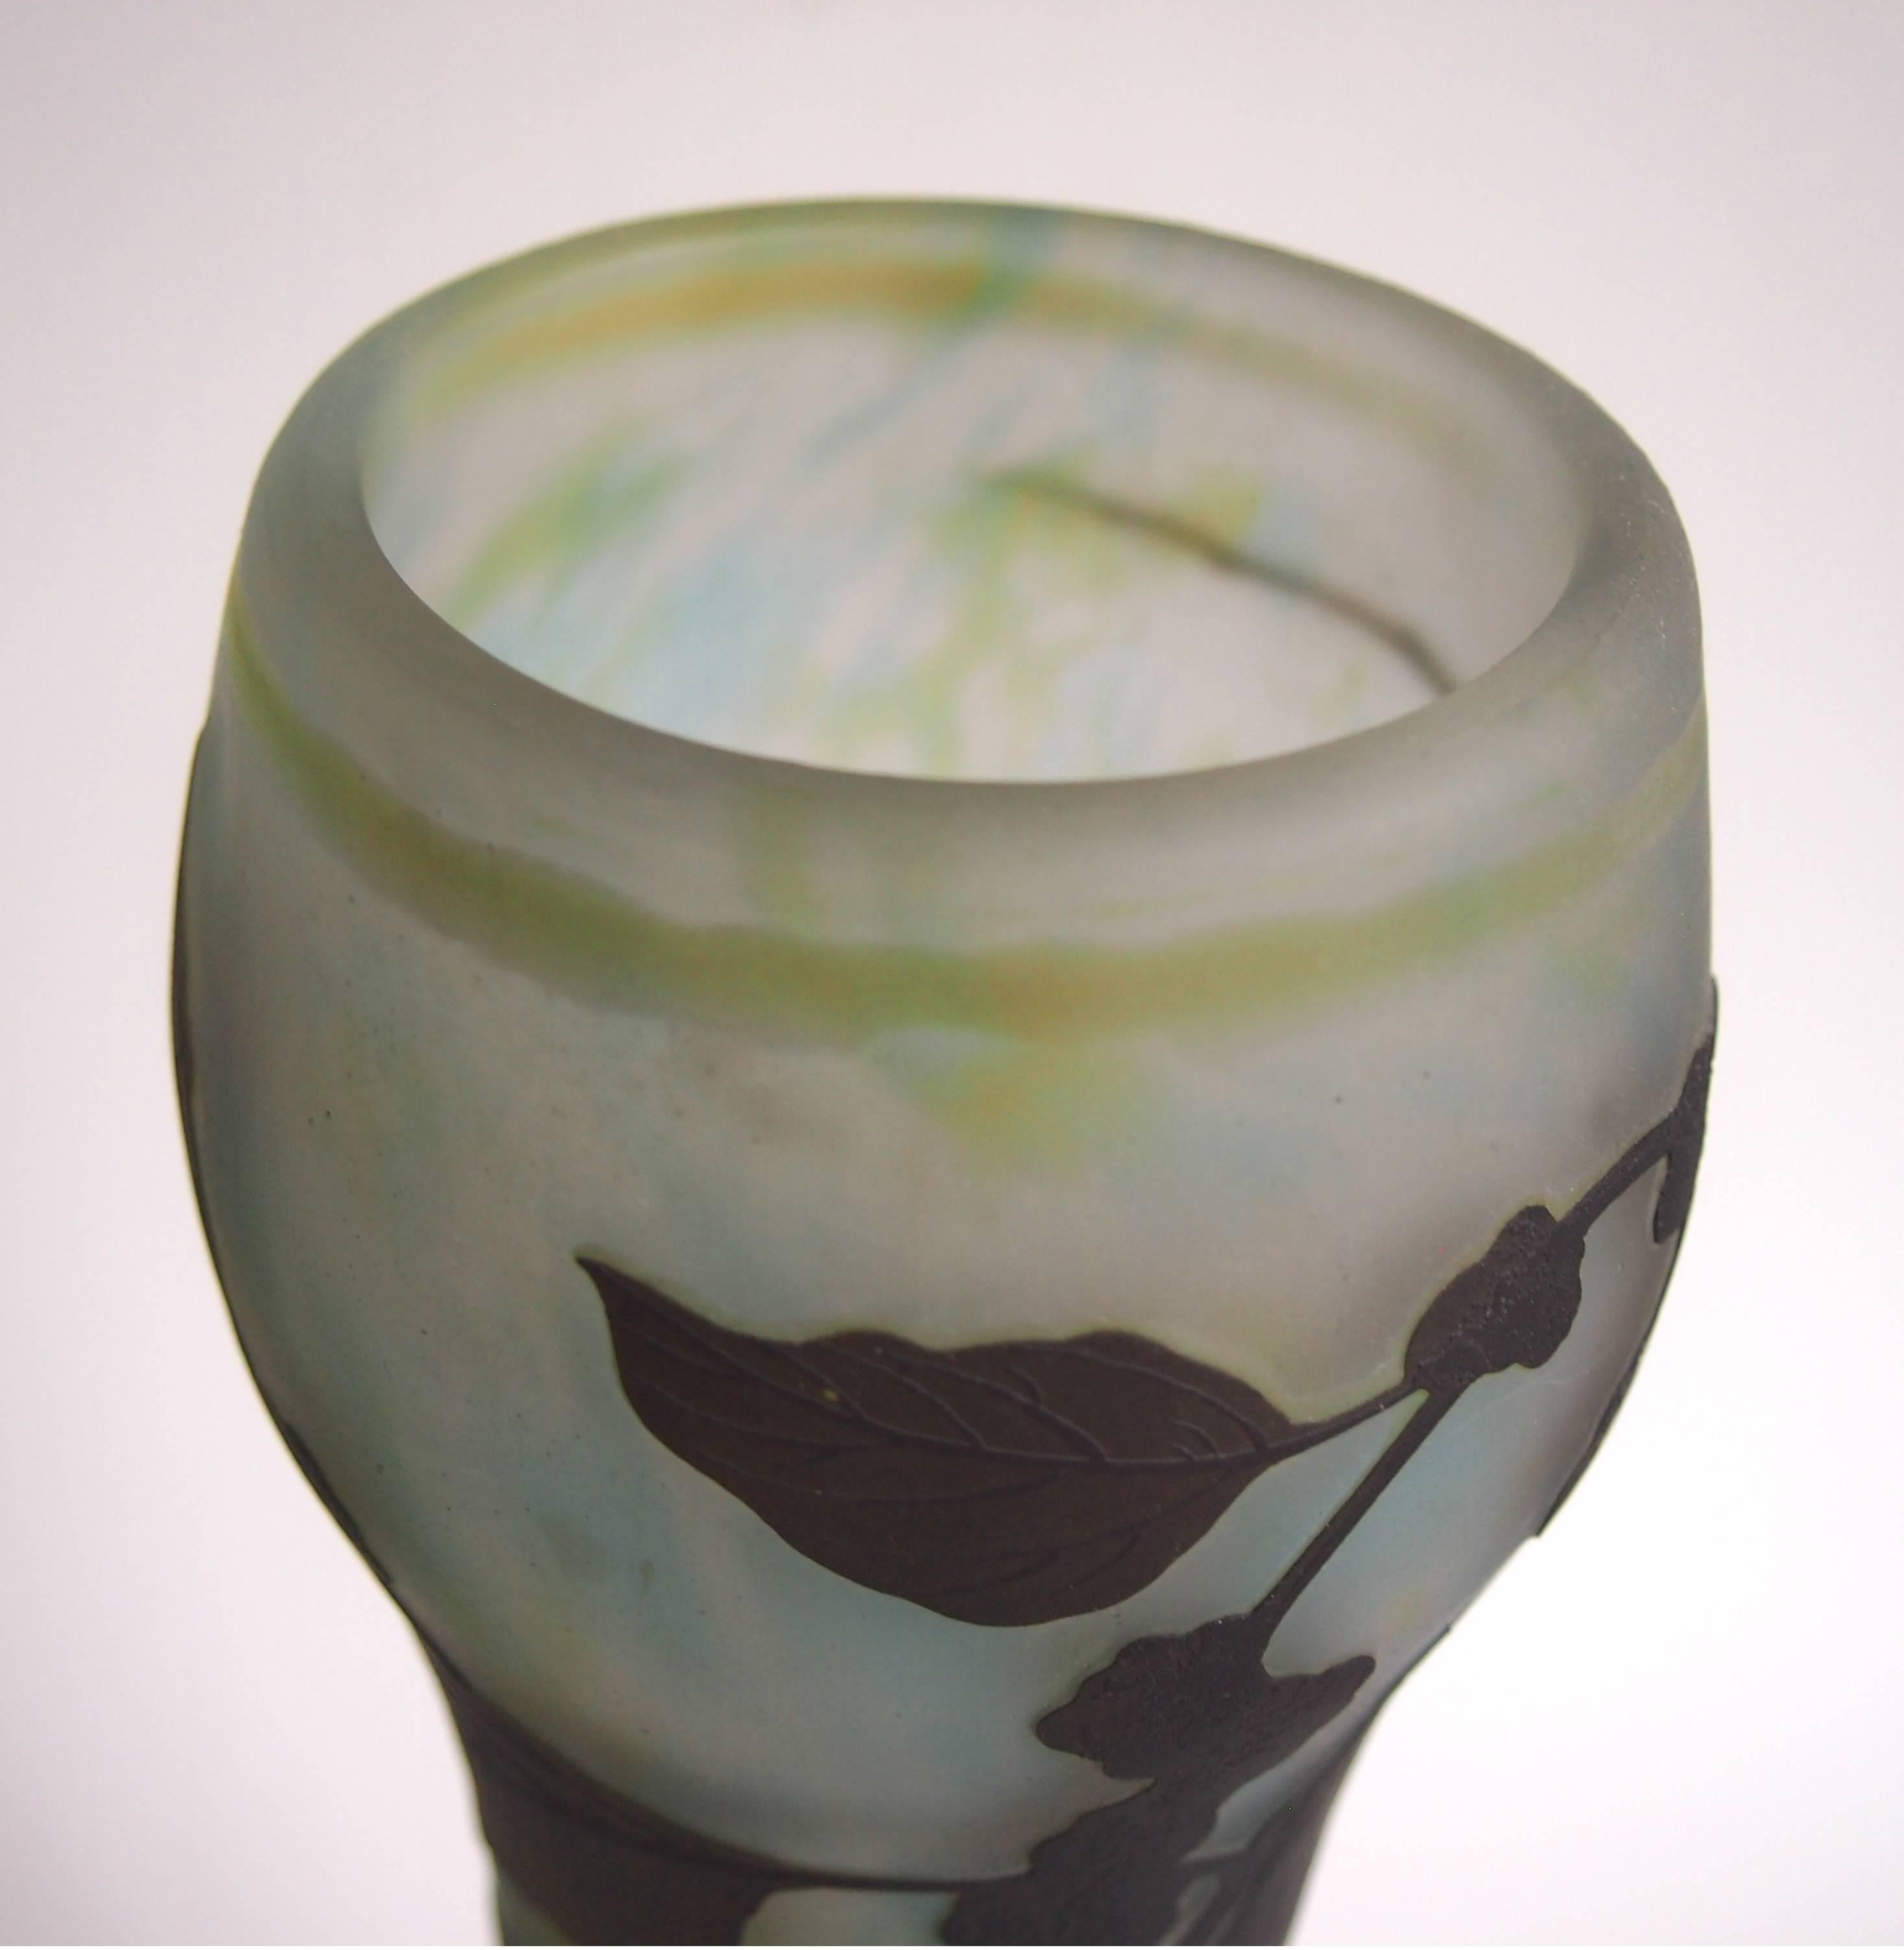 Art Glass French Art Nouveau Daum Carved and Cameo Glass Botanical Vase c1900